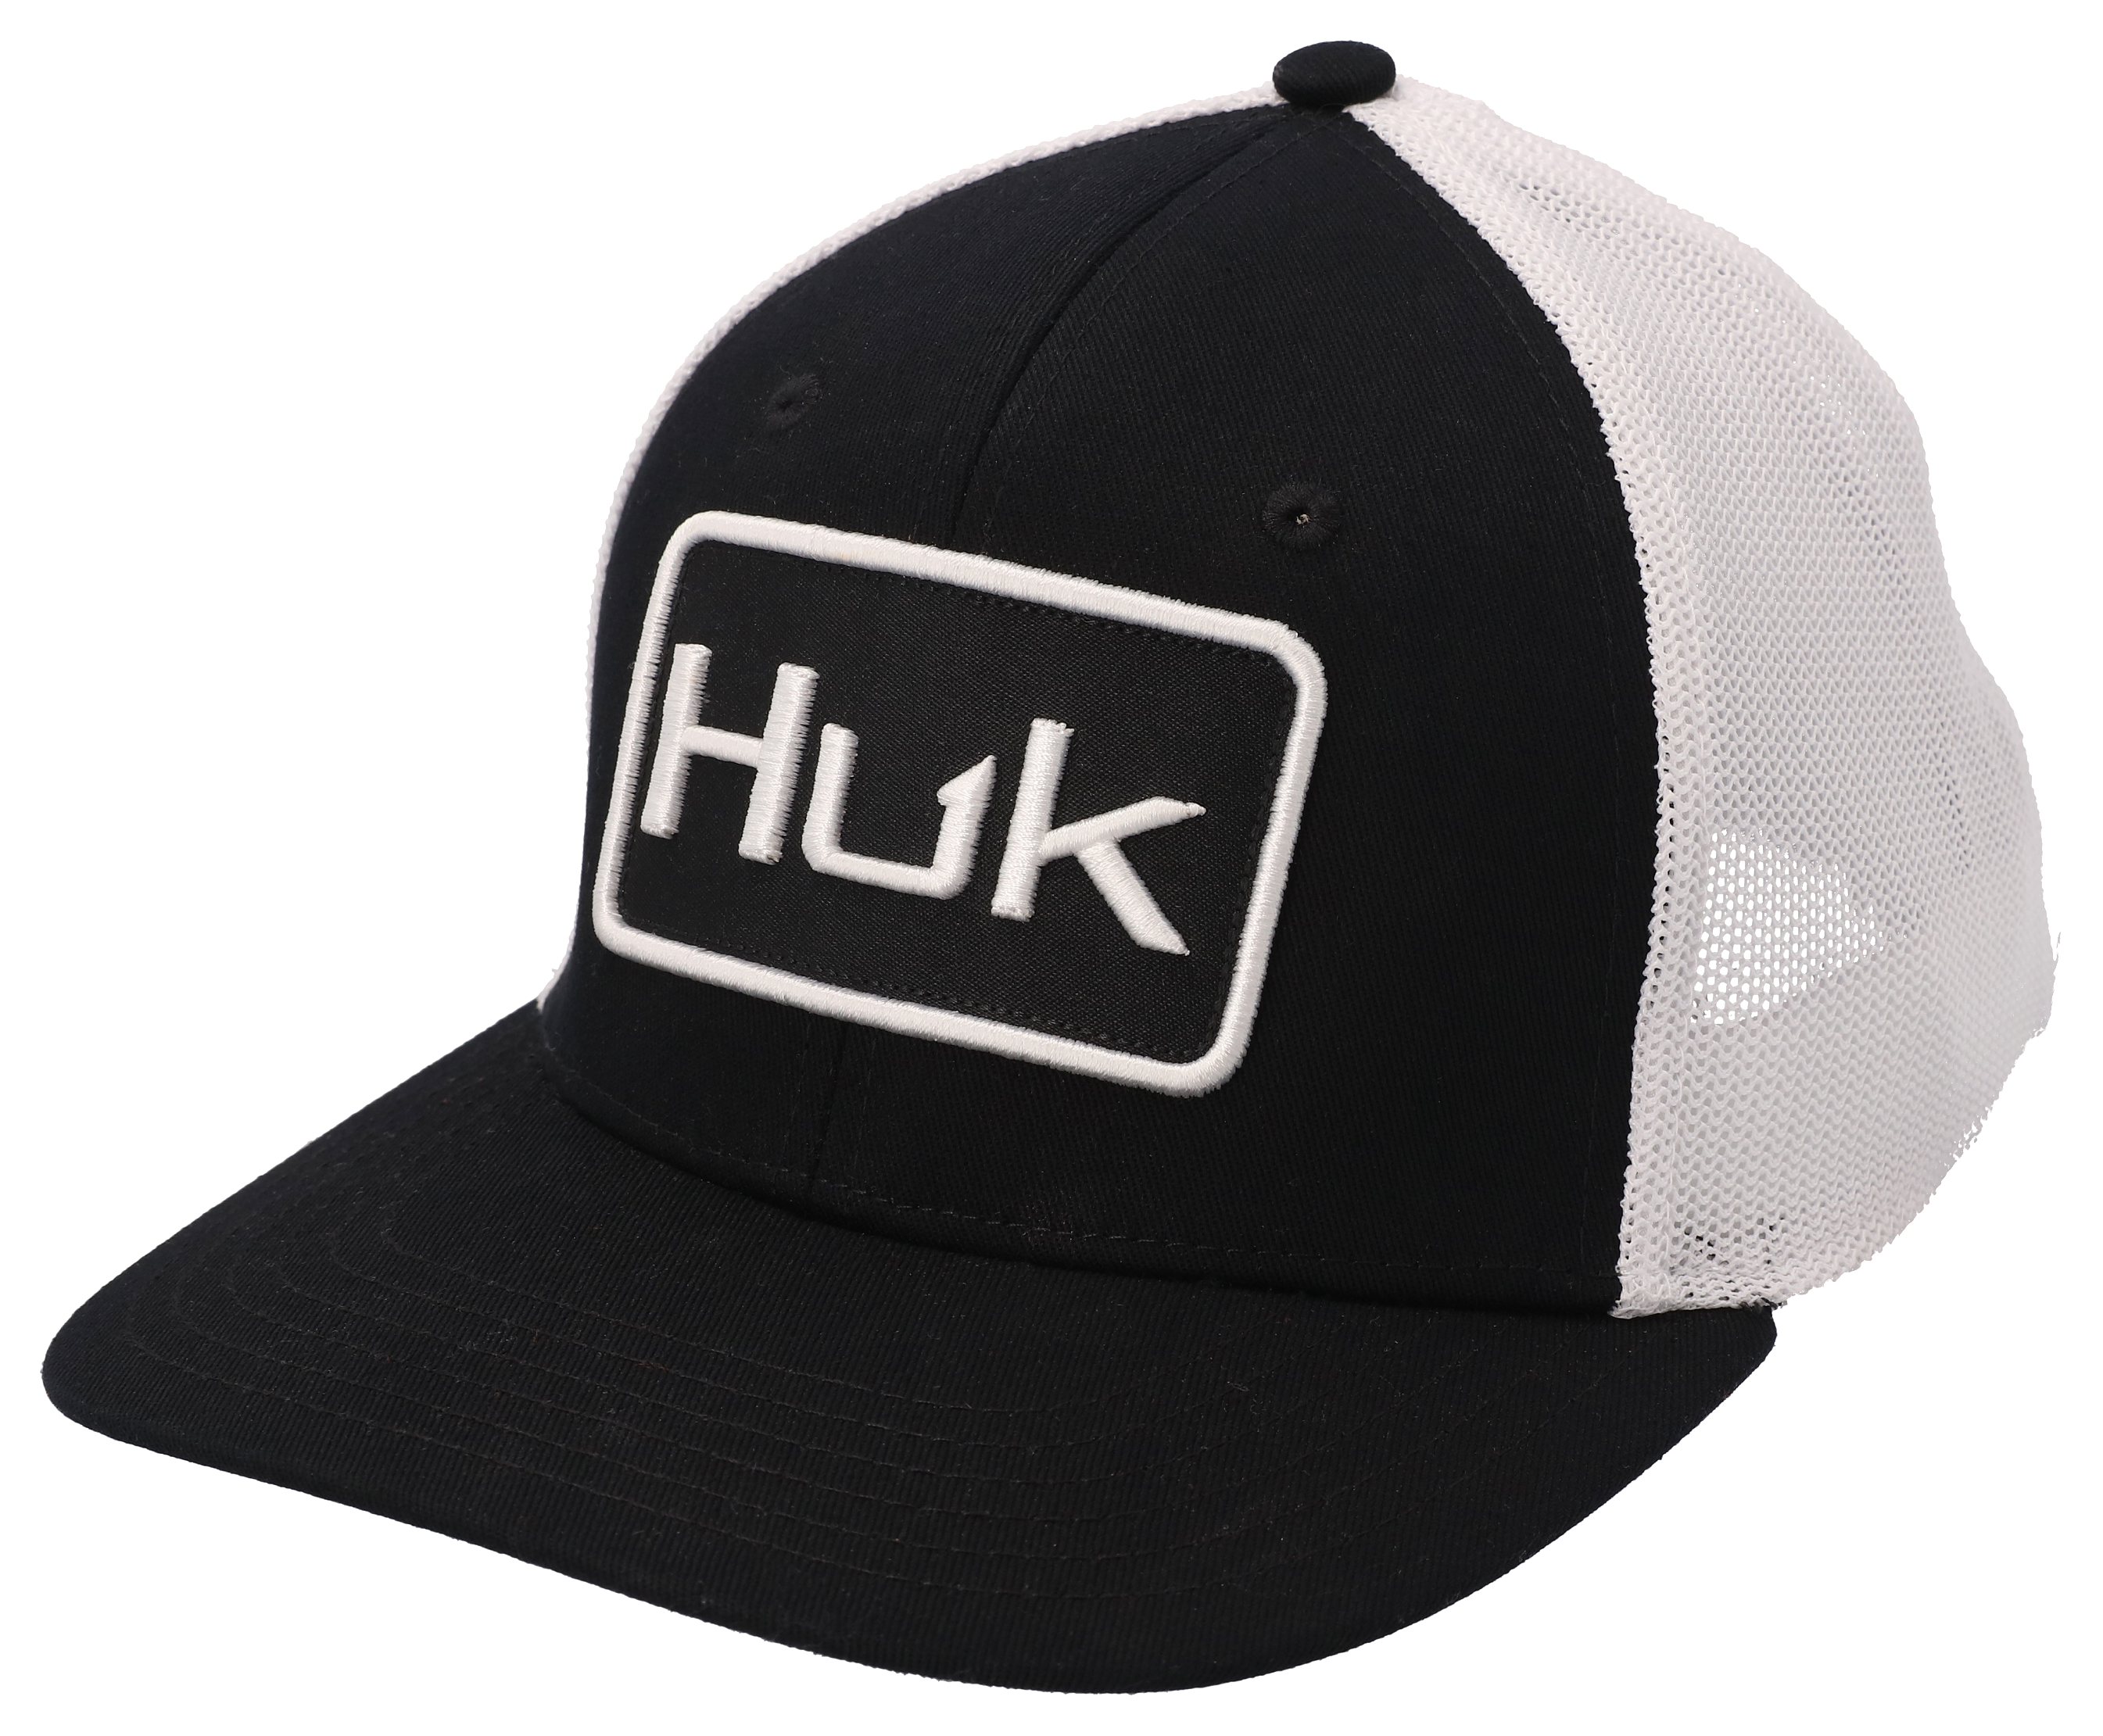 Huk Solid Stretch Trucker Cap